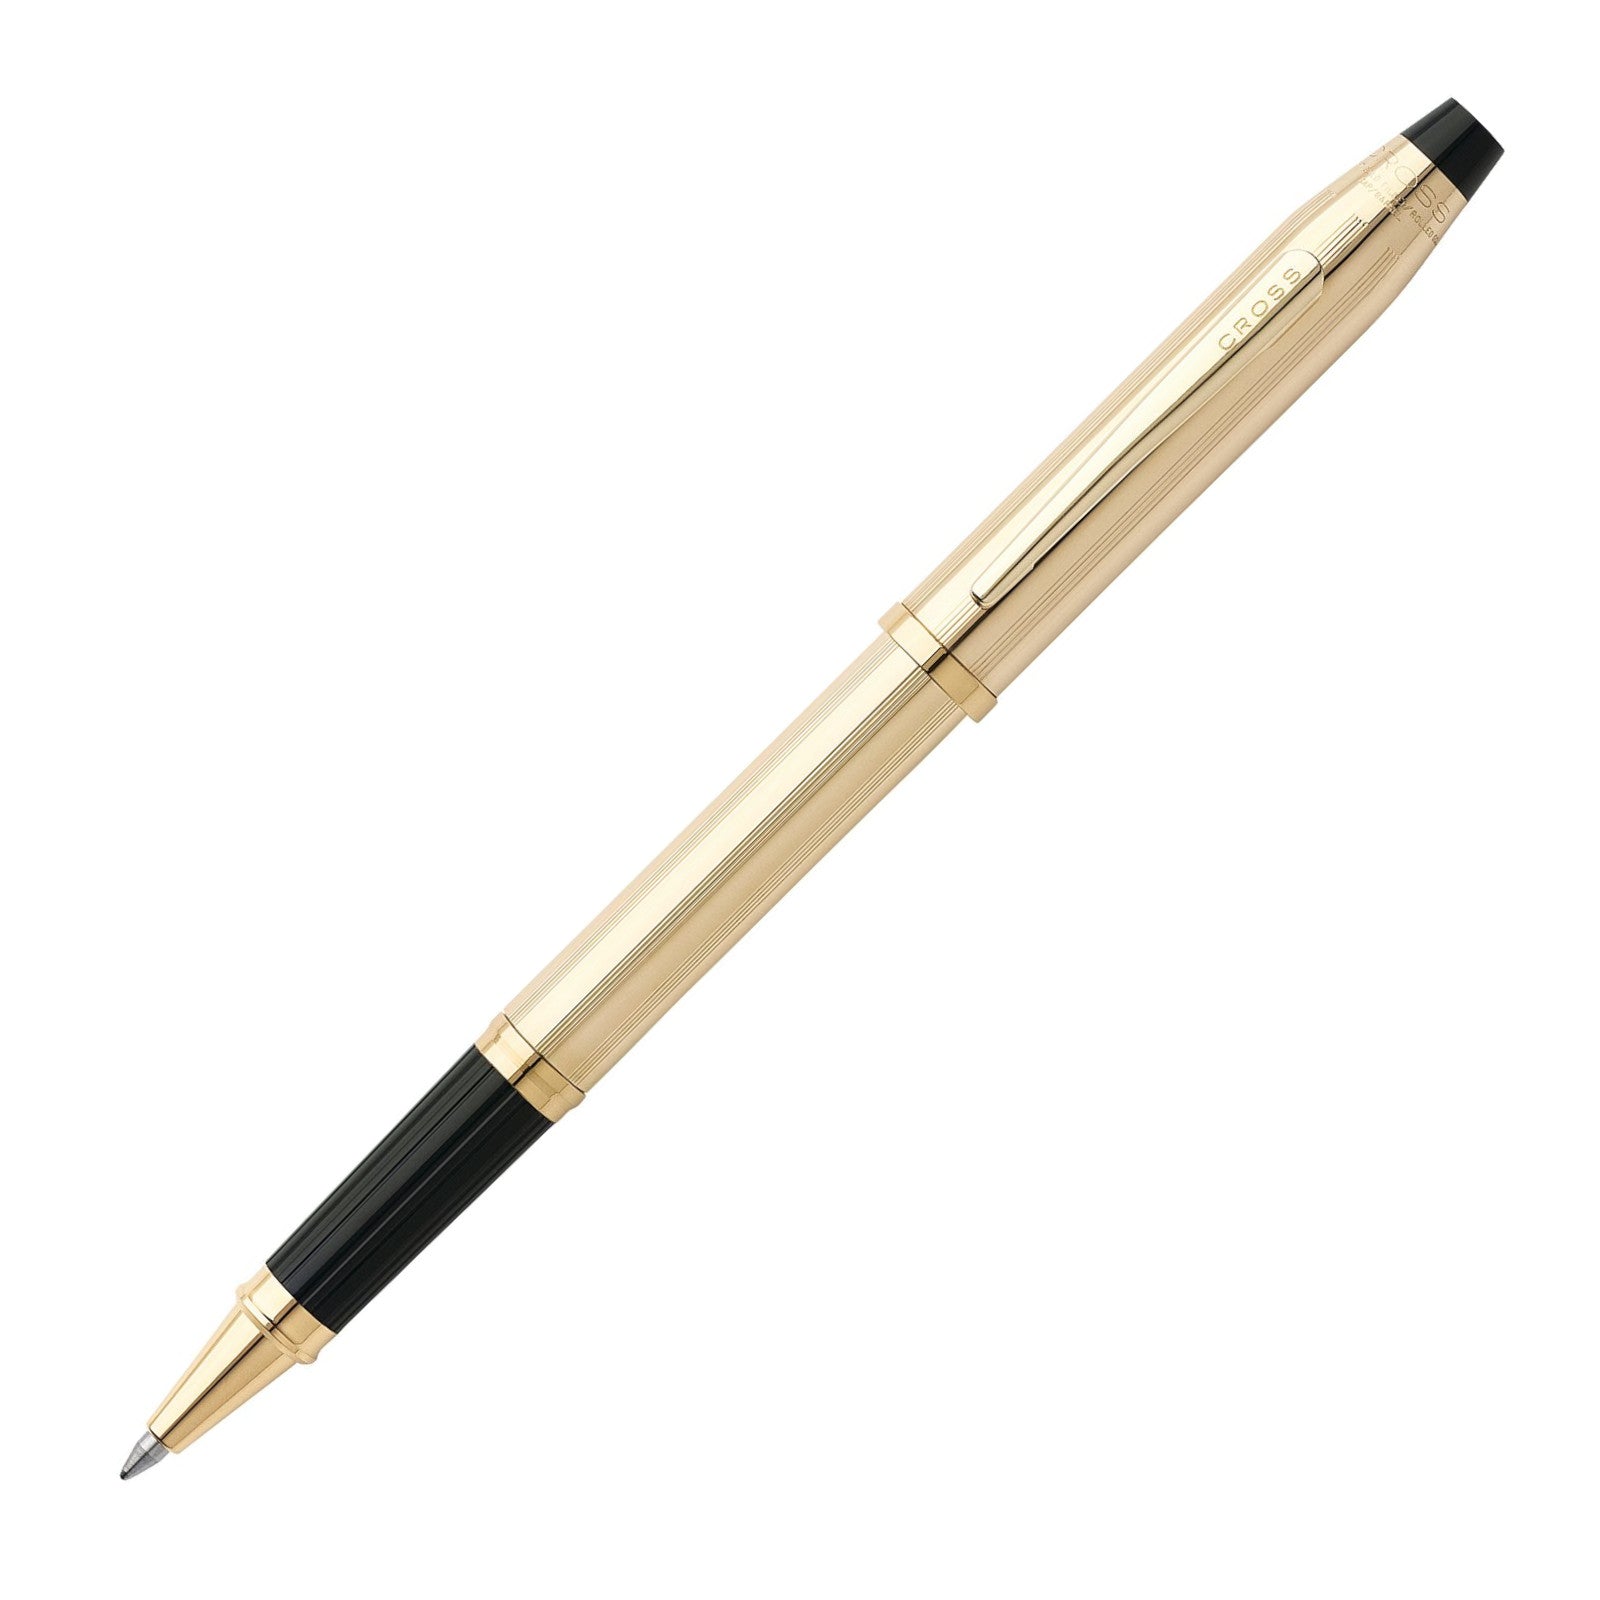 Pen 10. Ручка Cross since 1845 1/20 14kt Gold. Cross Century II Pen. Ручка x Gold. Ручка роллер золотистая.